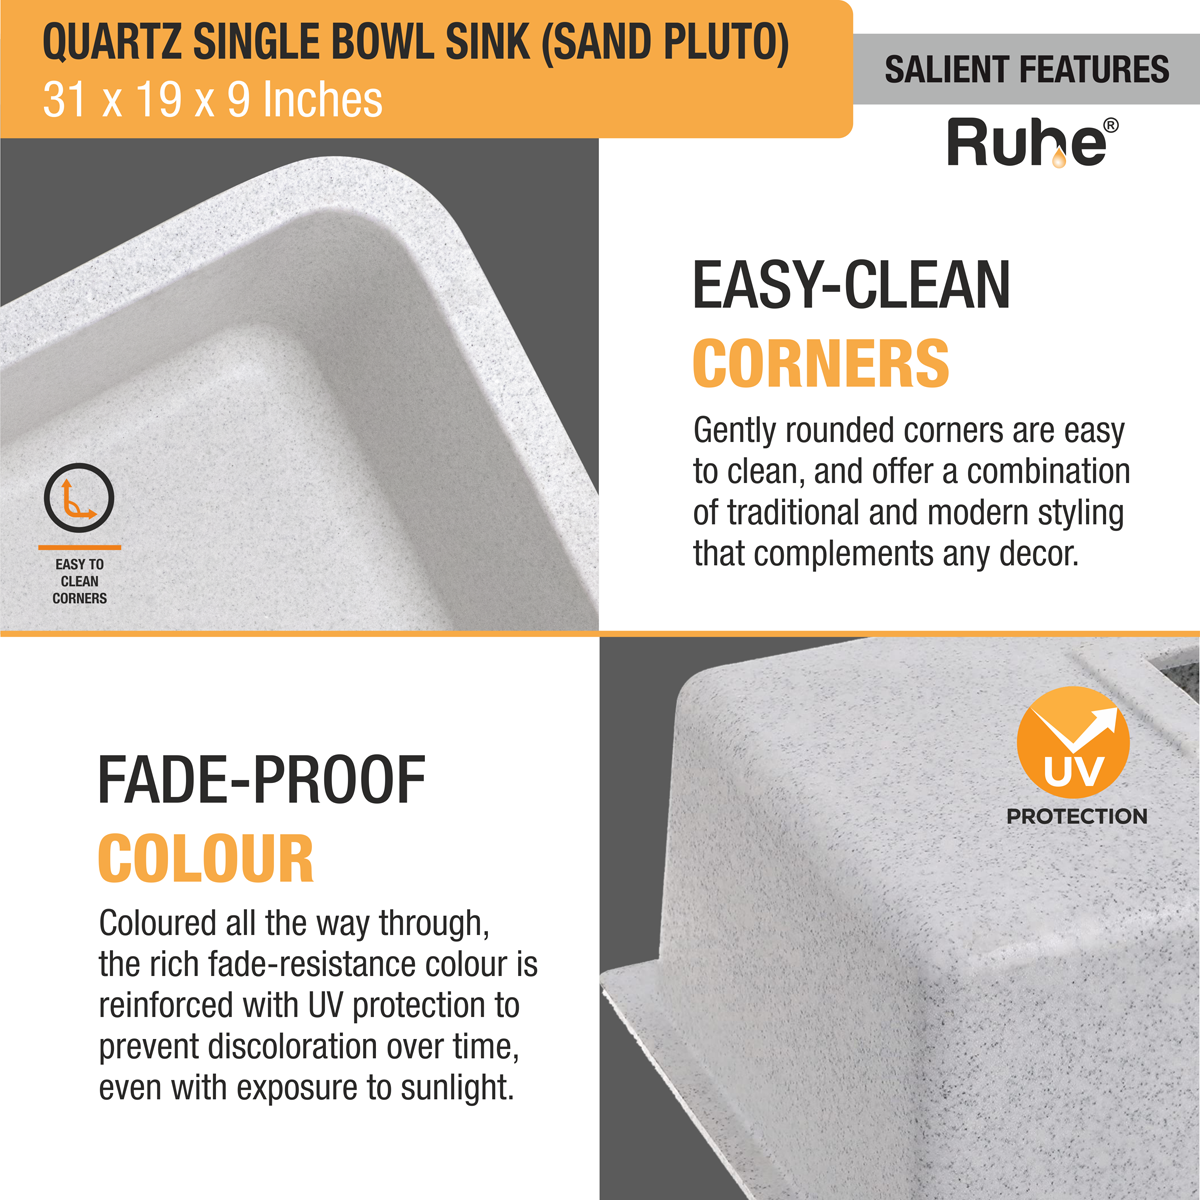 Quartz Single Bowl Kitchen Sink - Sand Pluto (31 x 19 x 9 inches) - by Ruhe®